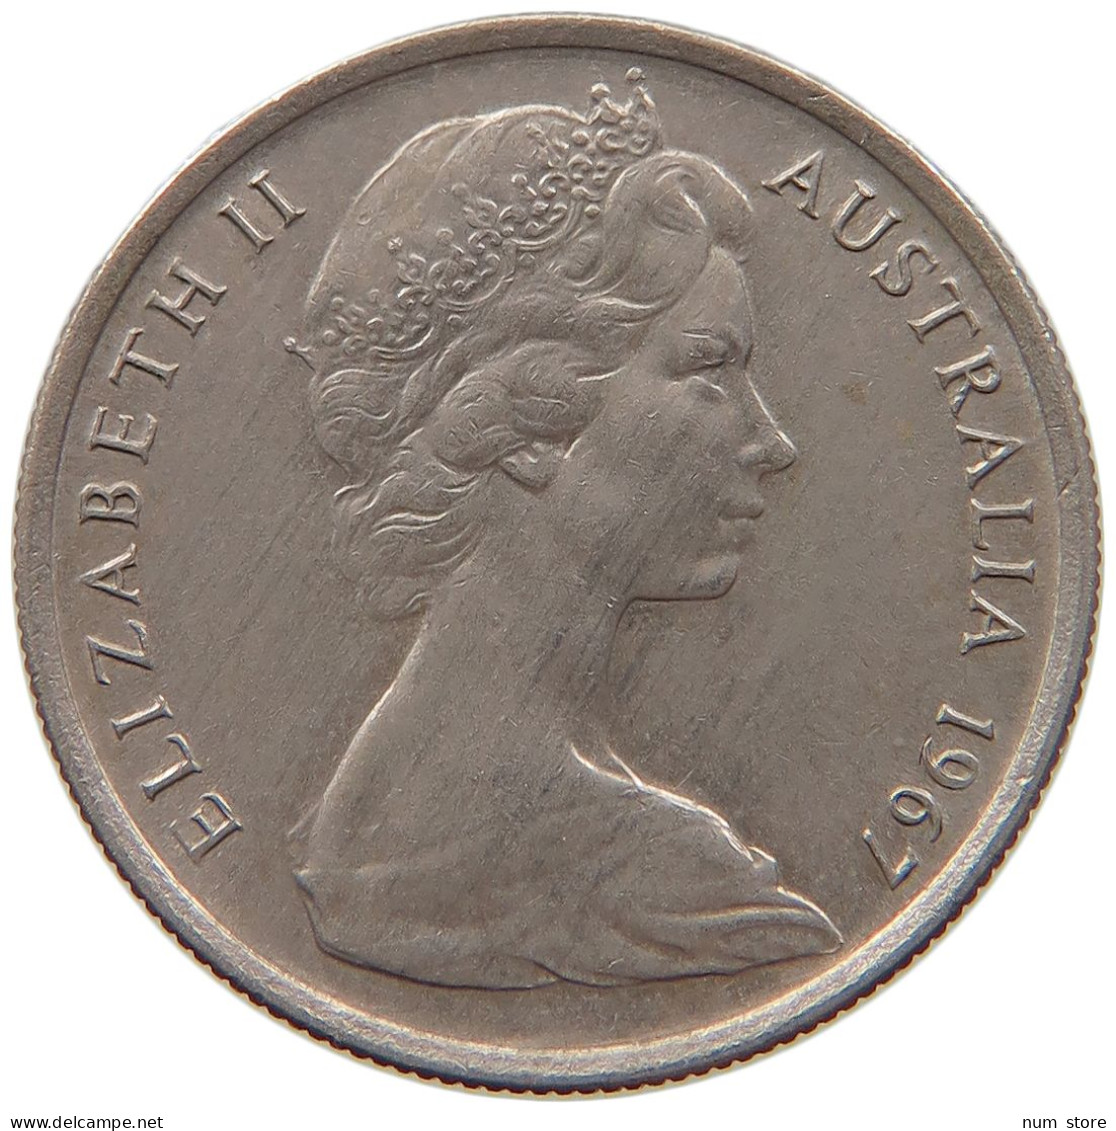 AUSTRALIA 5 CENTS 1967 ELIZABETH II. (1952-2022) #MA 066542 - 5 Cents